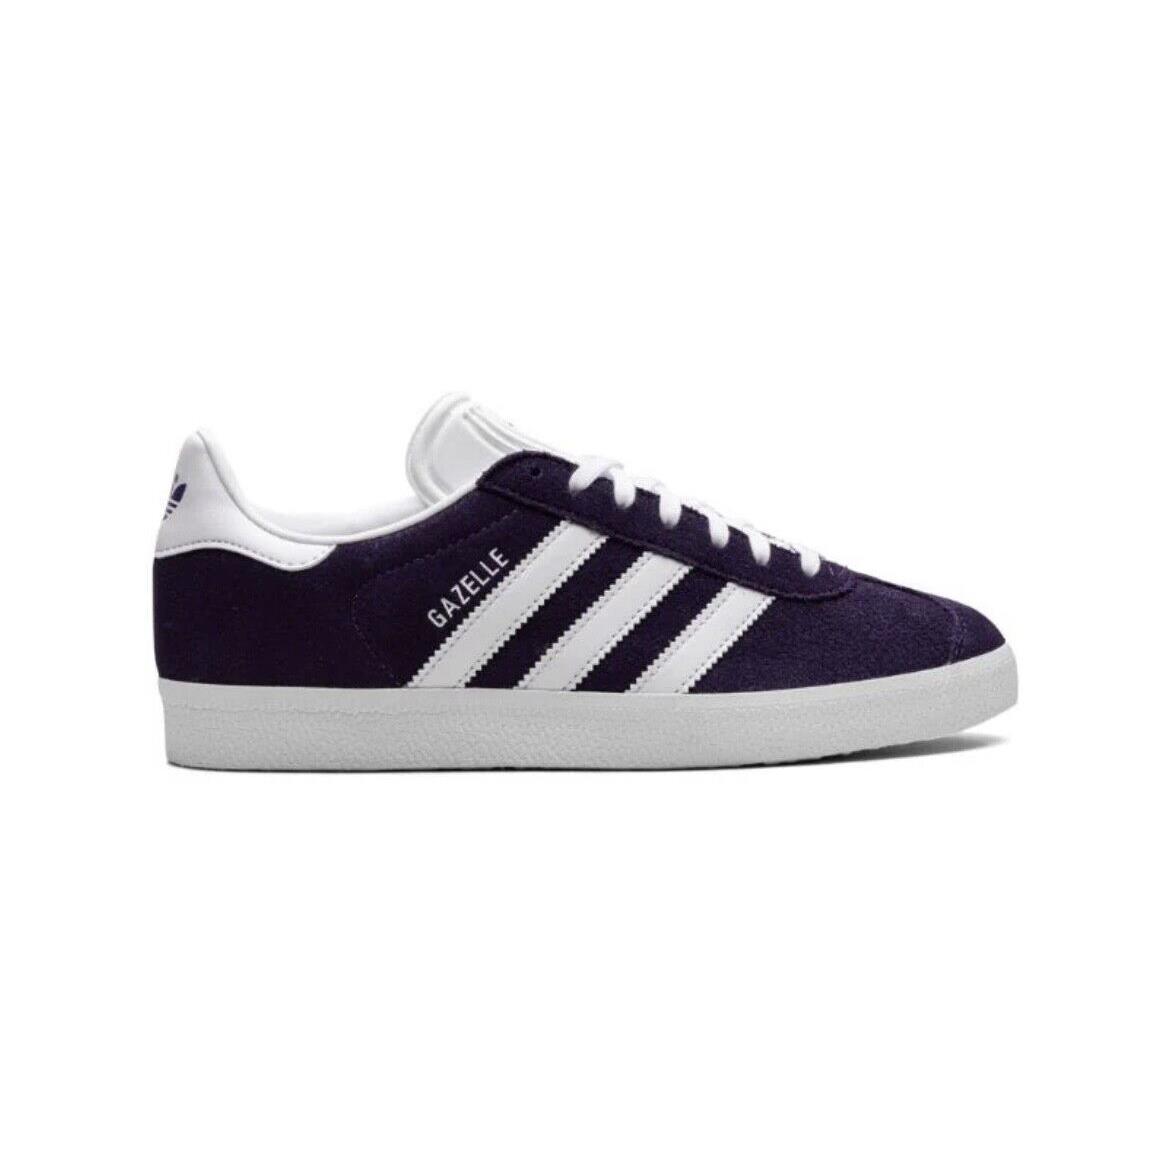 Adidas Gazelle Mens Sz 9-11 Casual Retro Shoe Purple White Lifestyle Sneaker